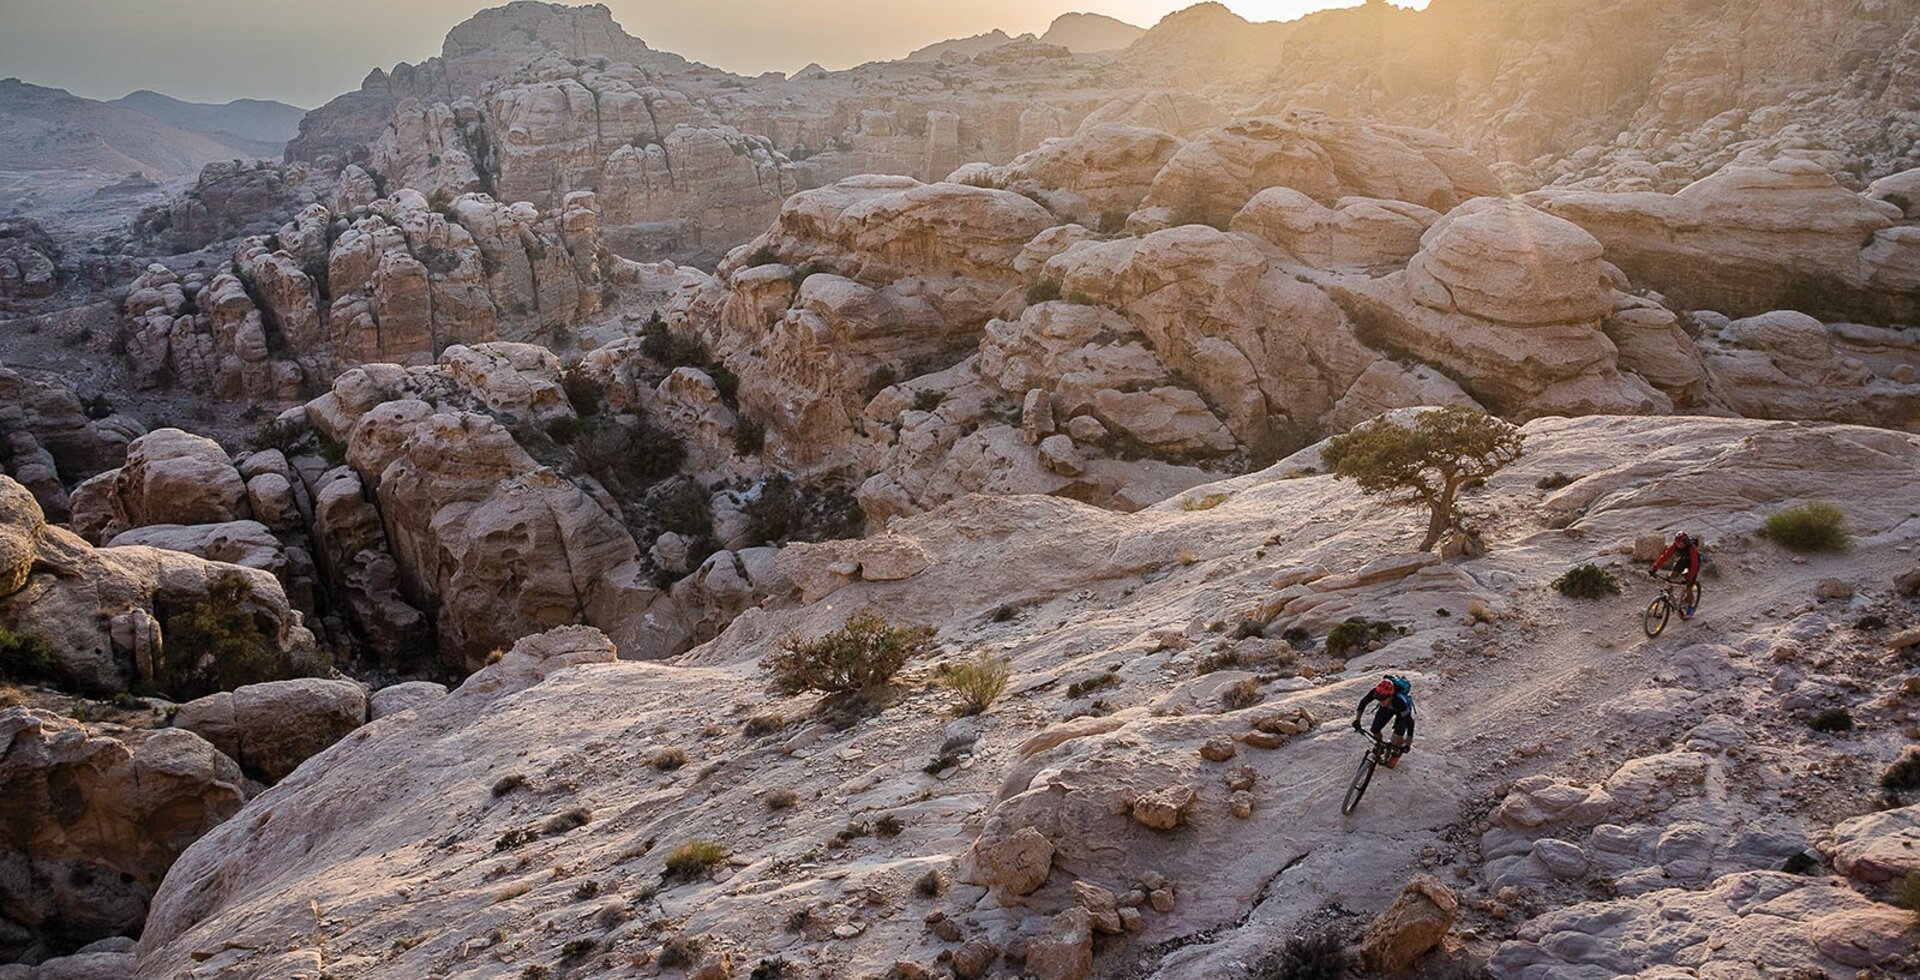 Andrew Findlay leads Sari Husseini through a rocky section of the Jordan Trail in the Shobak Qasabah District of Jordan.